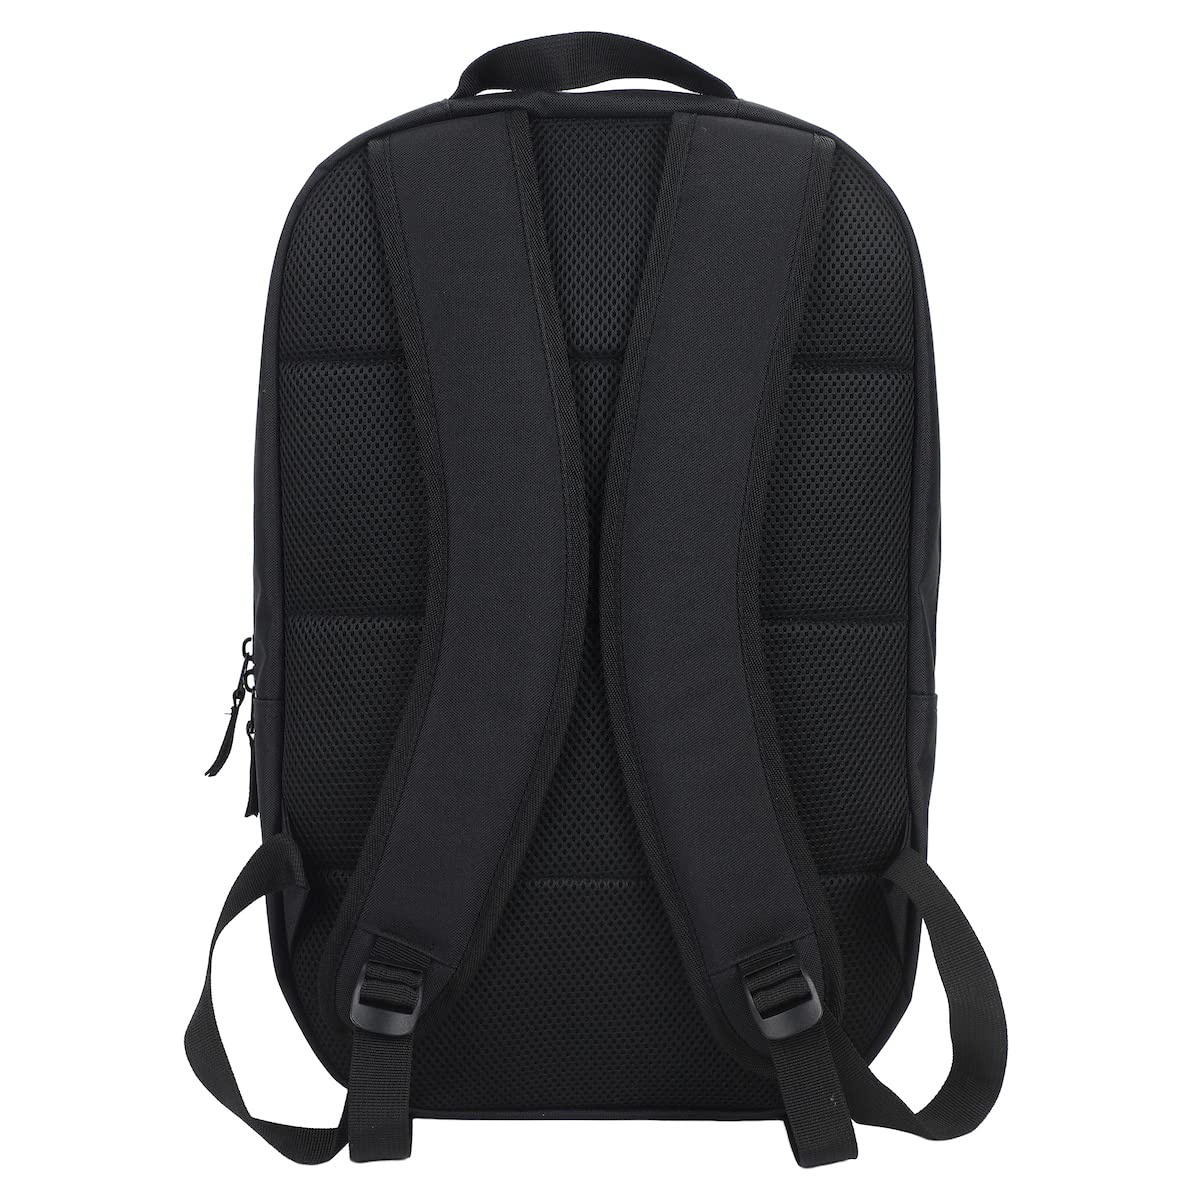 Spy x Family Backpack with Adjustable Shoulder Strap and Front Pocket